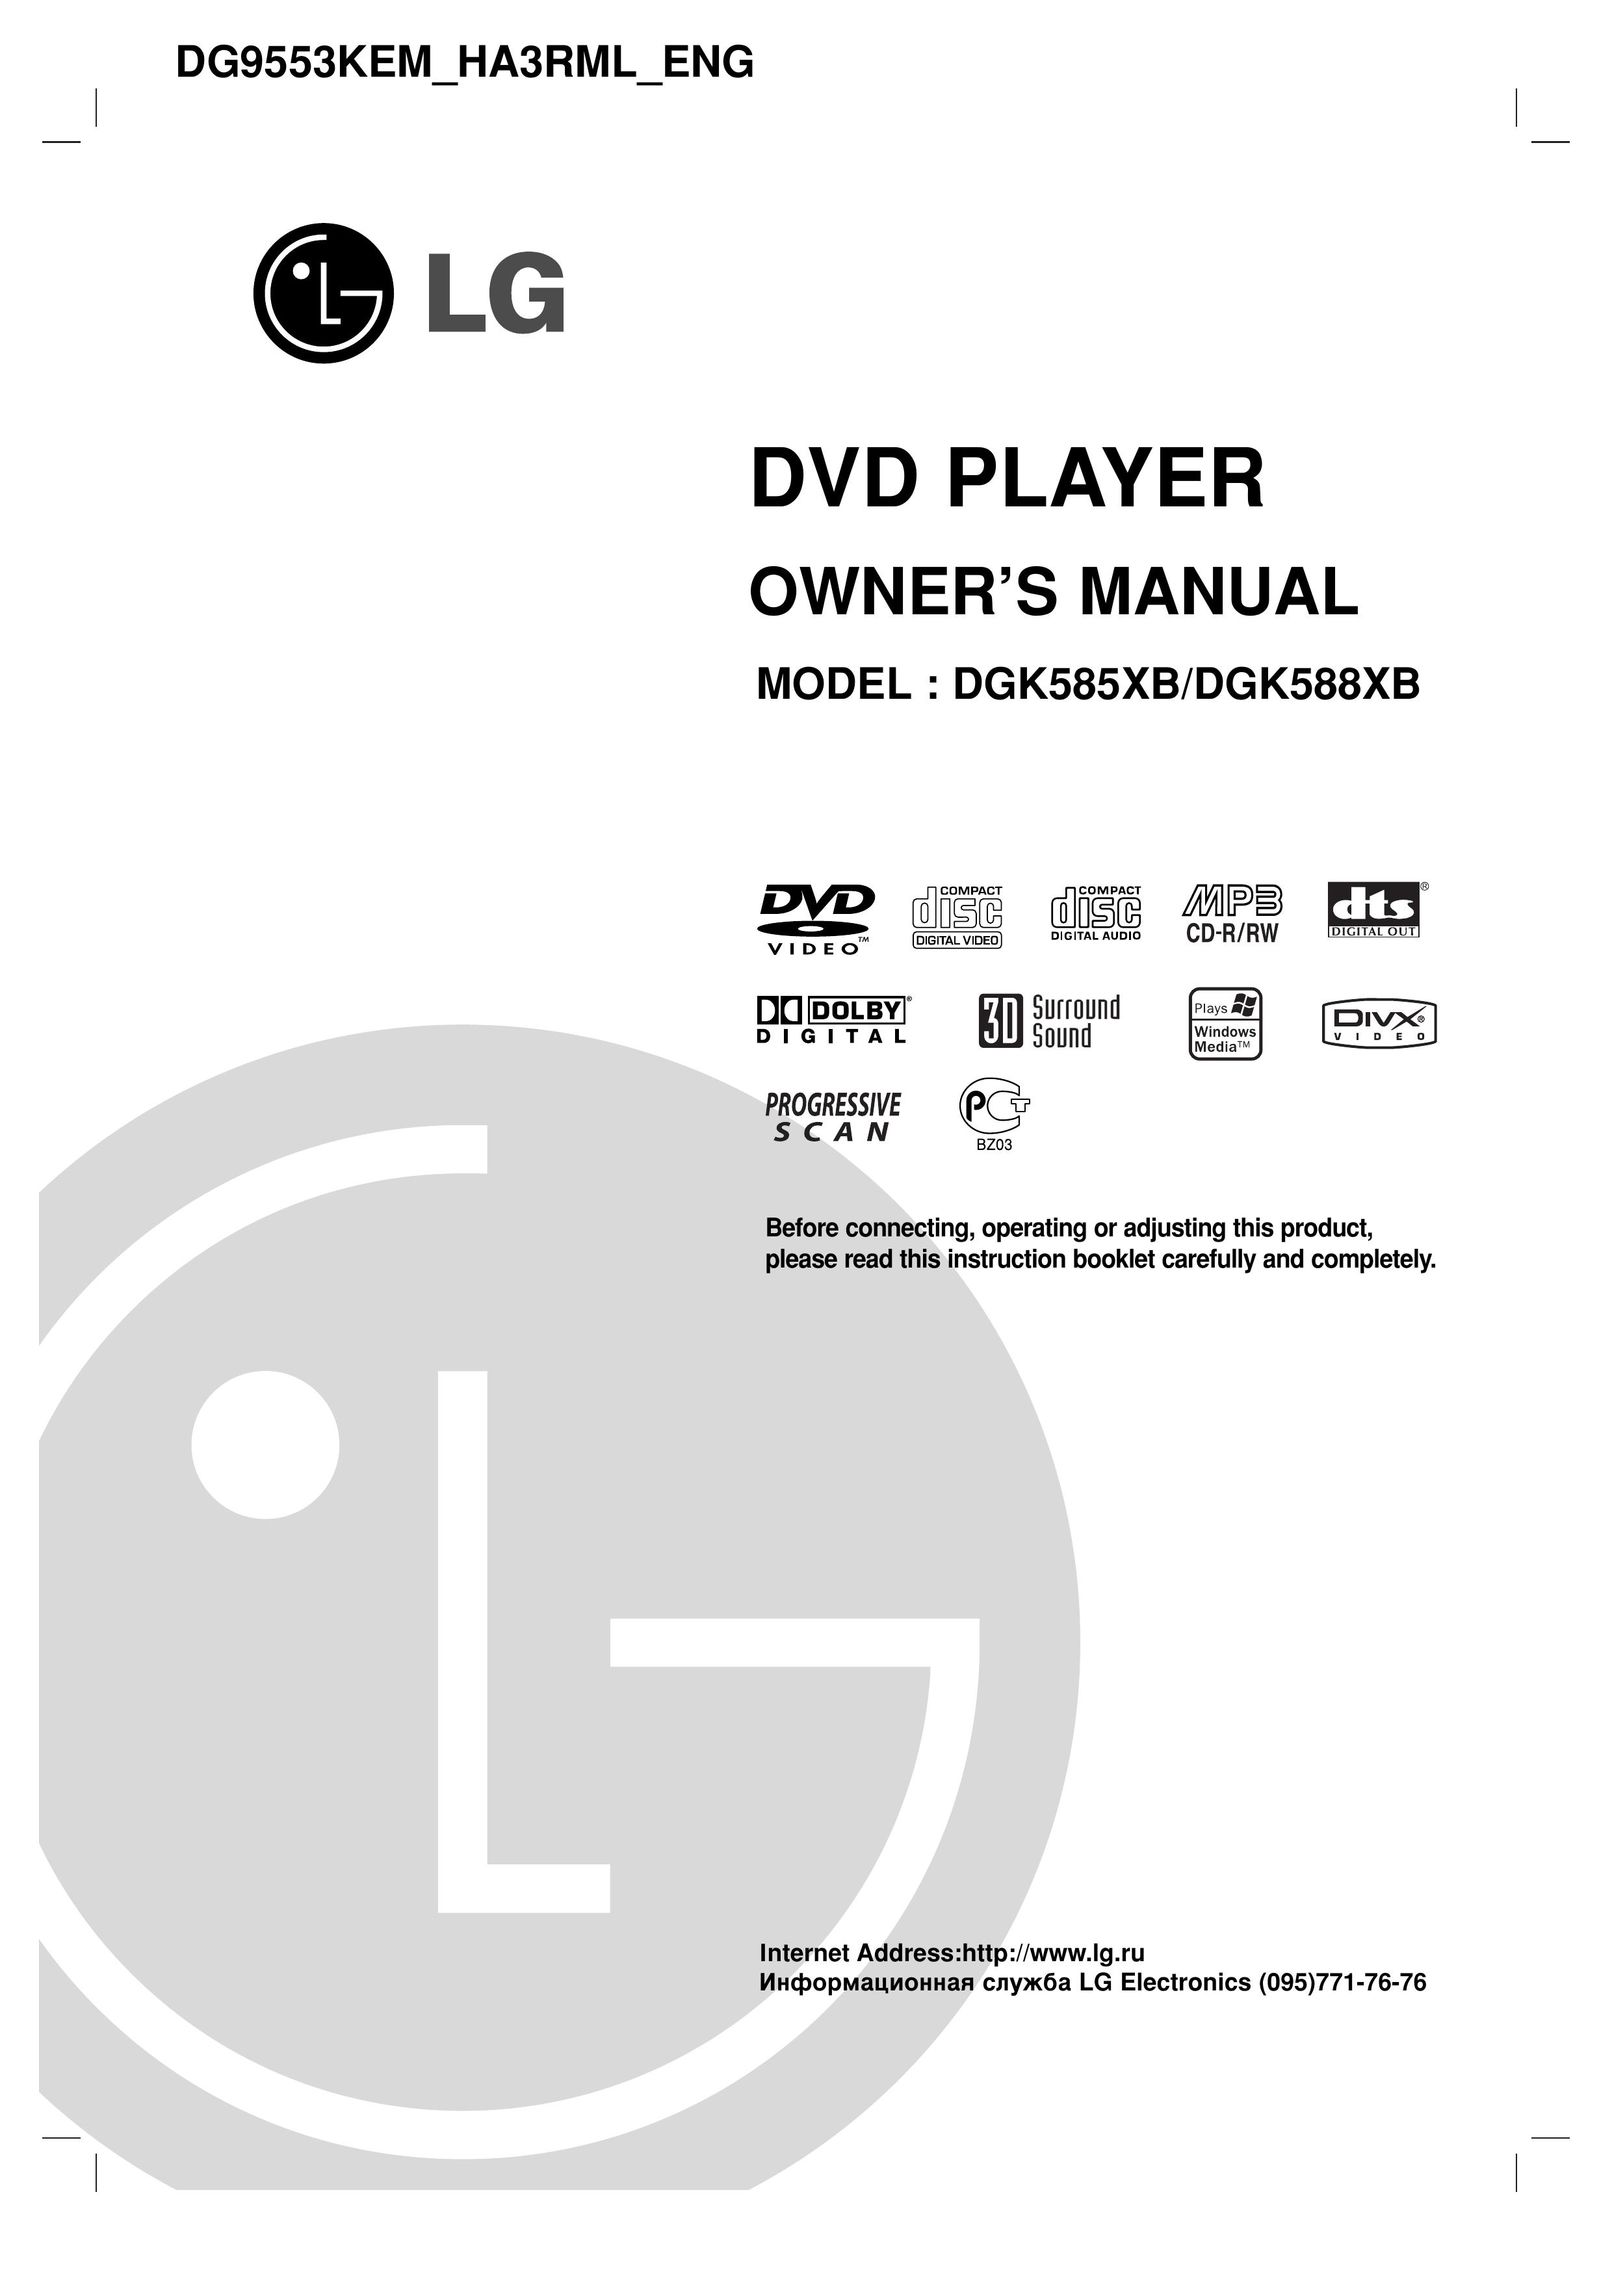 LG Electronics DGK585XB DVD Player User Manual